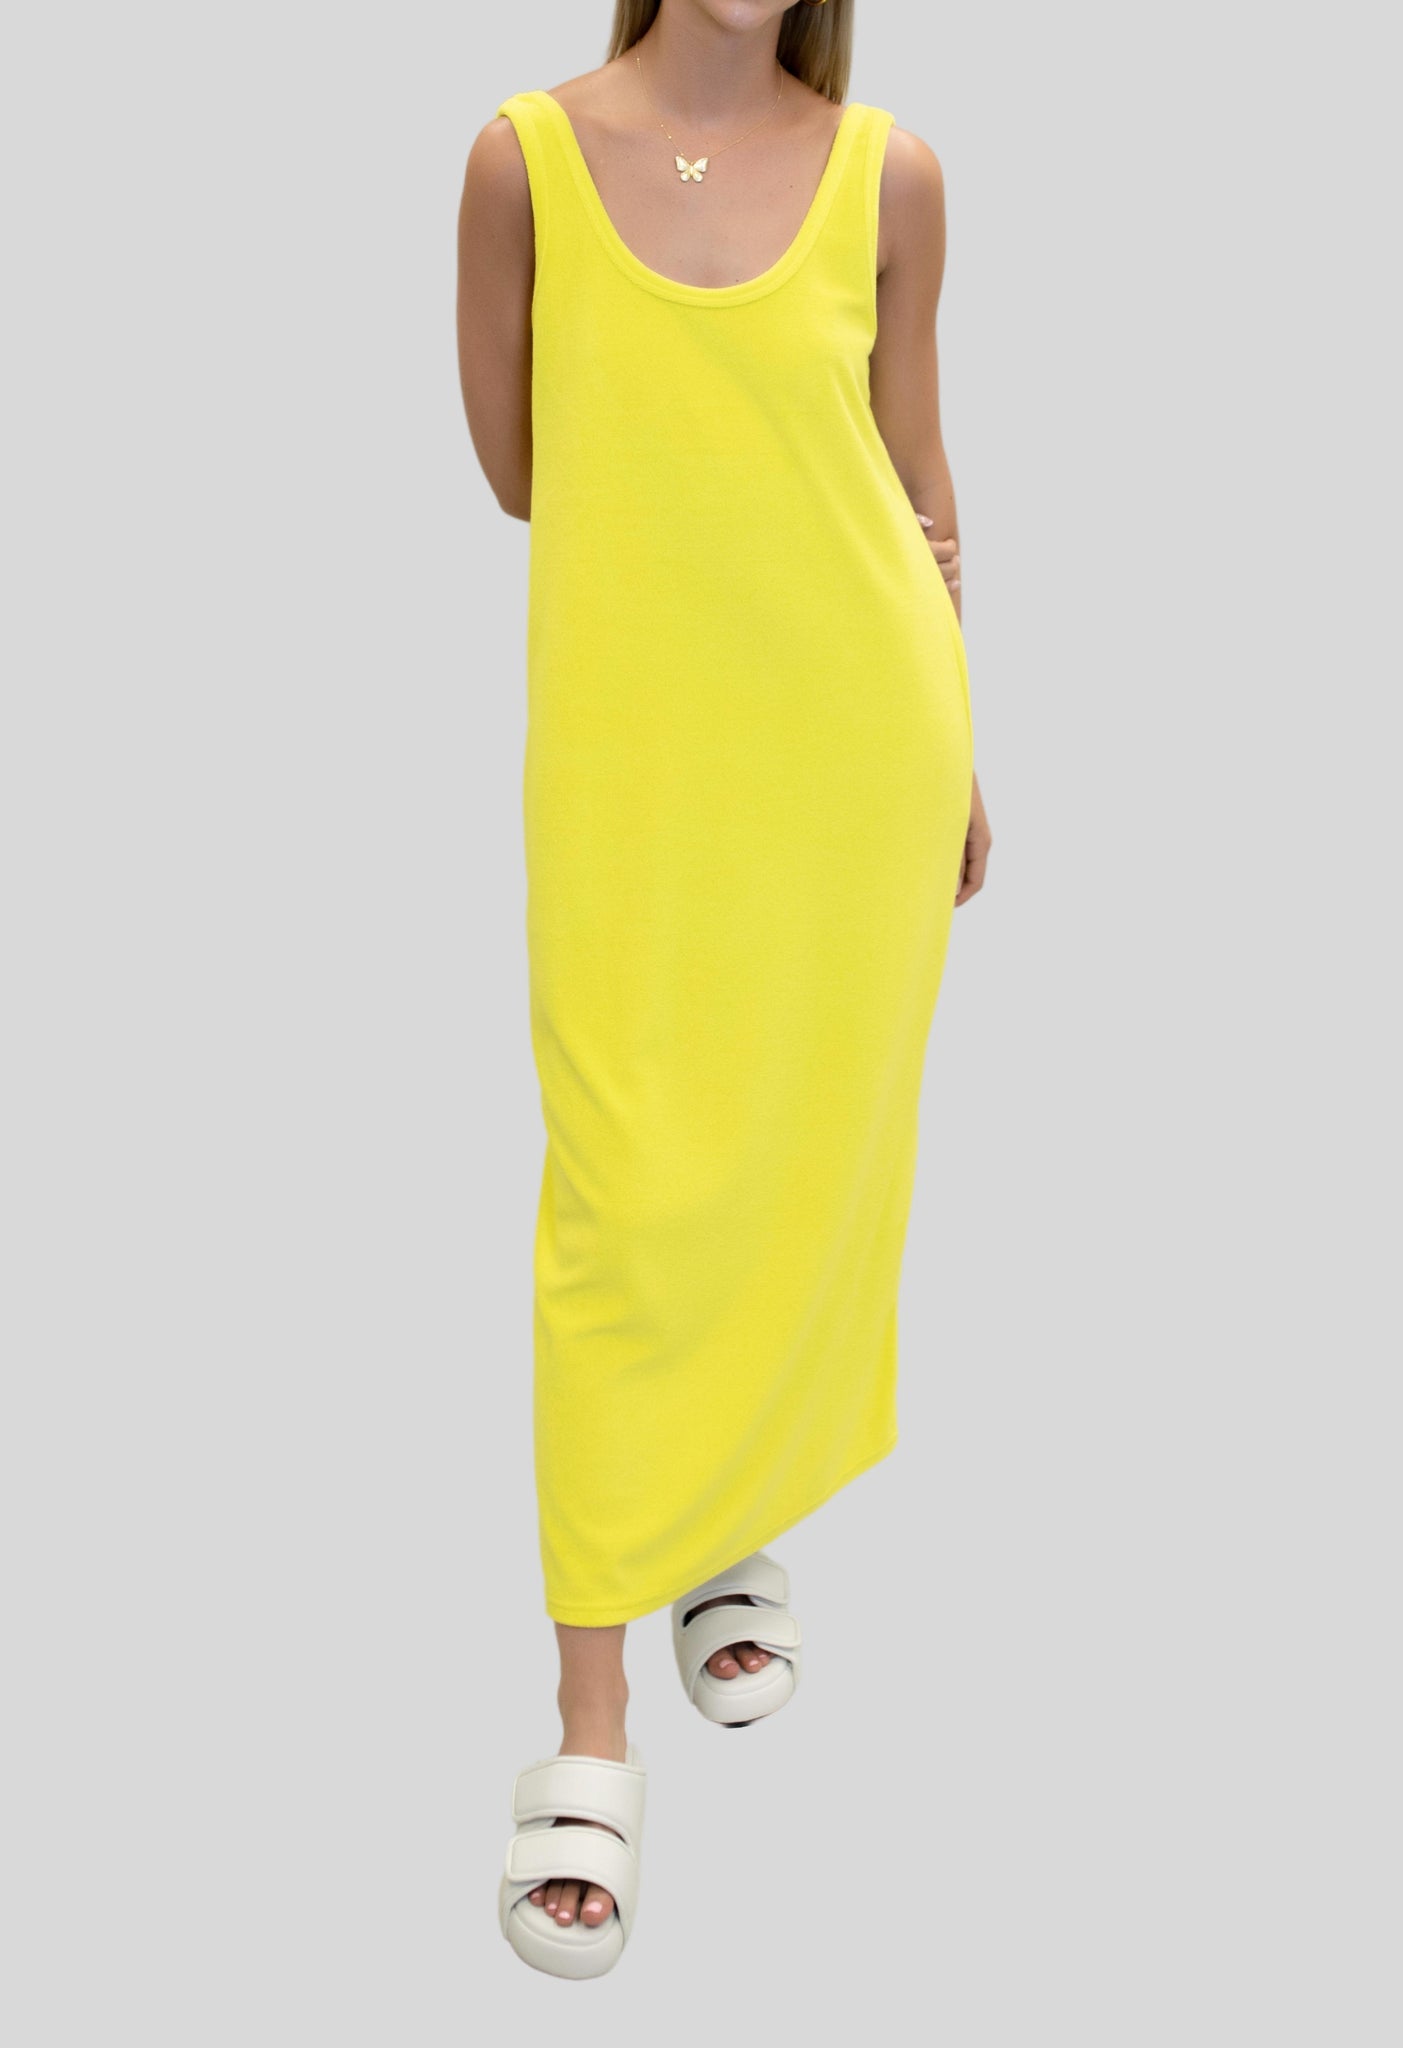 Yellow Terry Cloth Dress Nicole Kwon